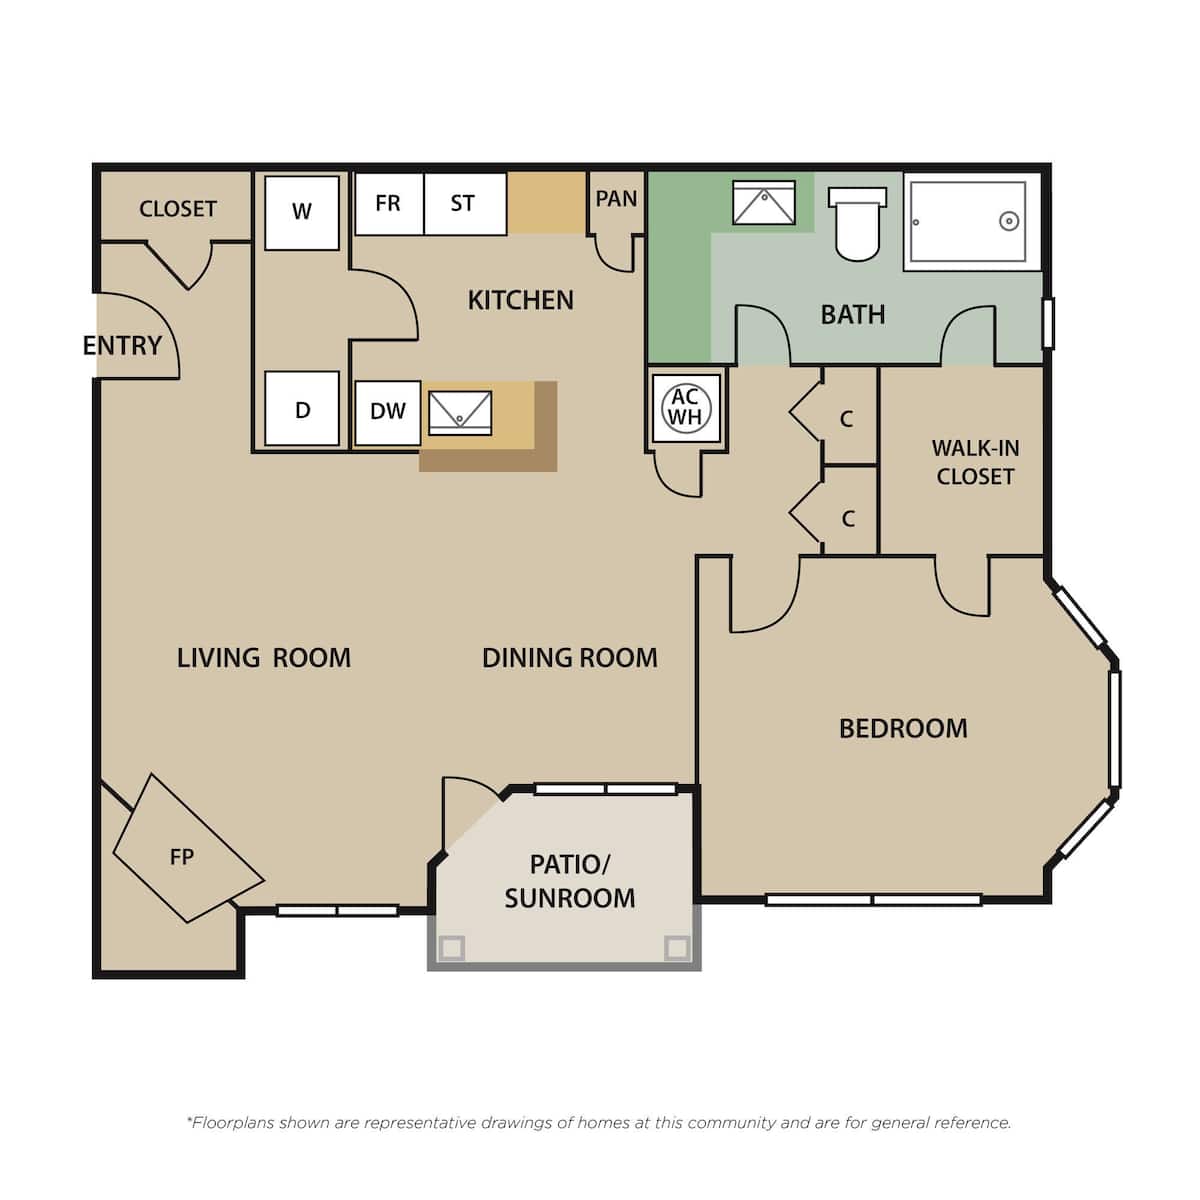 Floorplan diagram for GROVE A7, showing 1 bedroom